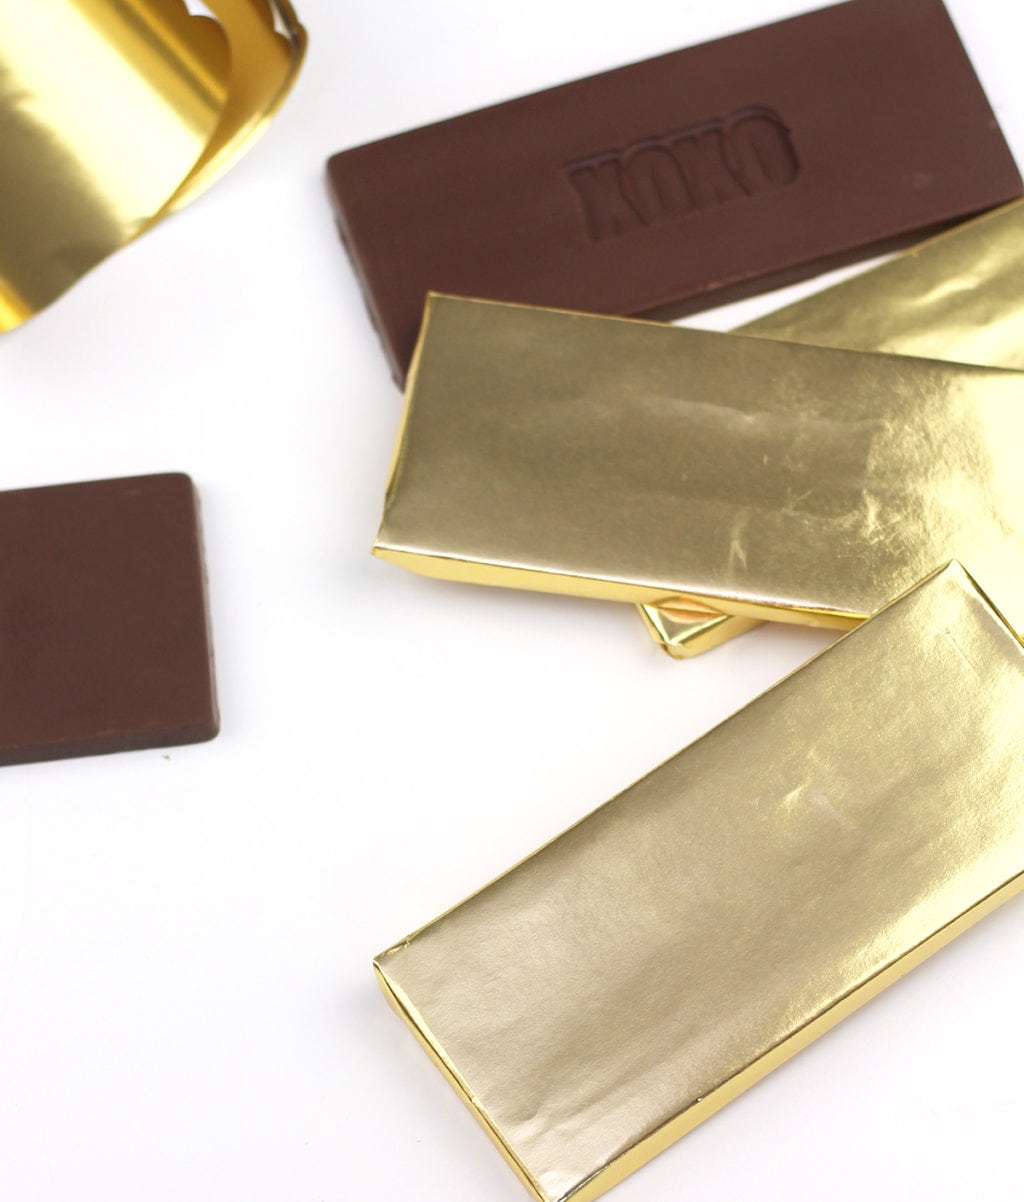 Easy DIY Stamped Chocolate Bars | damask love